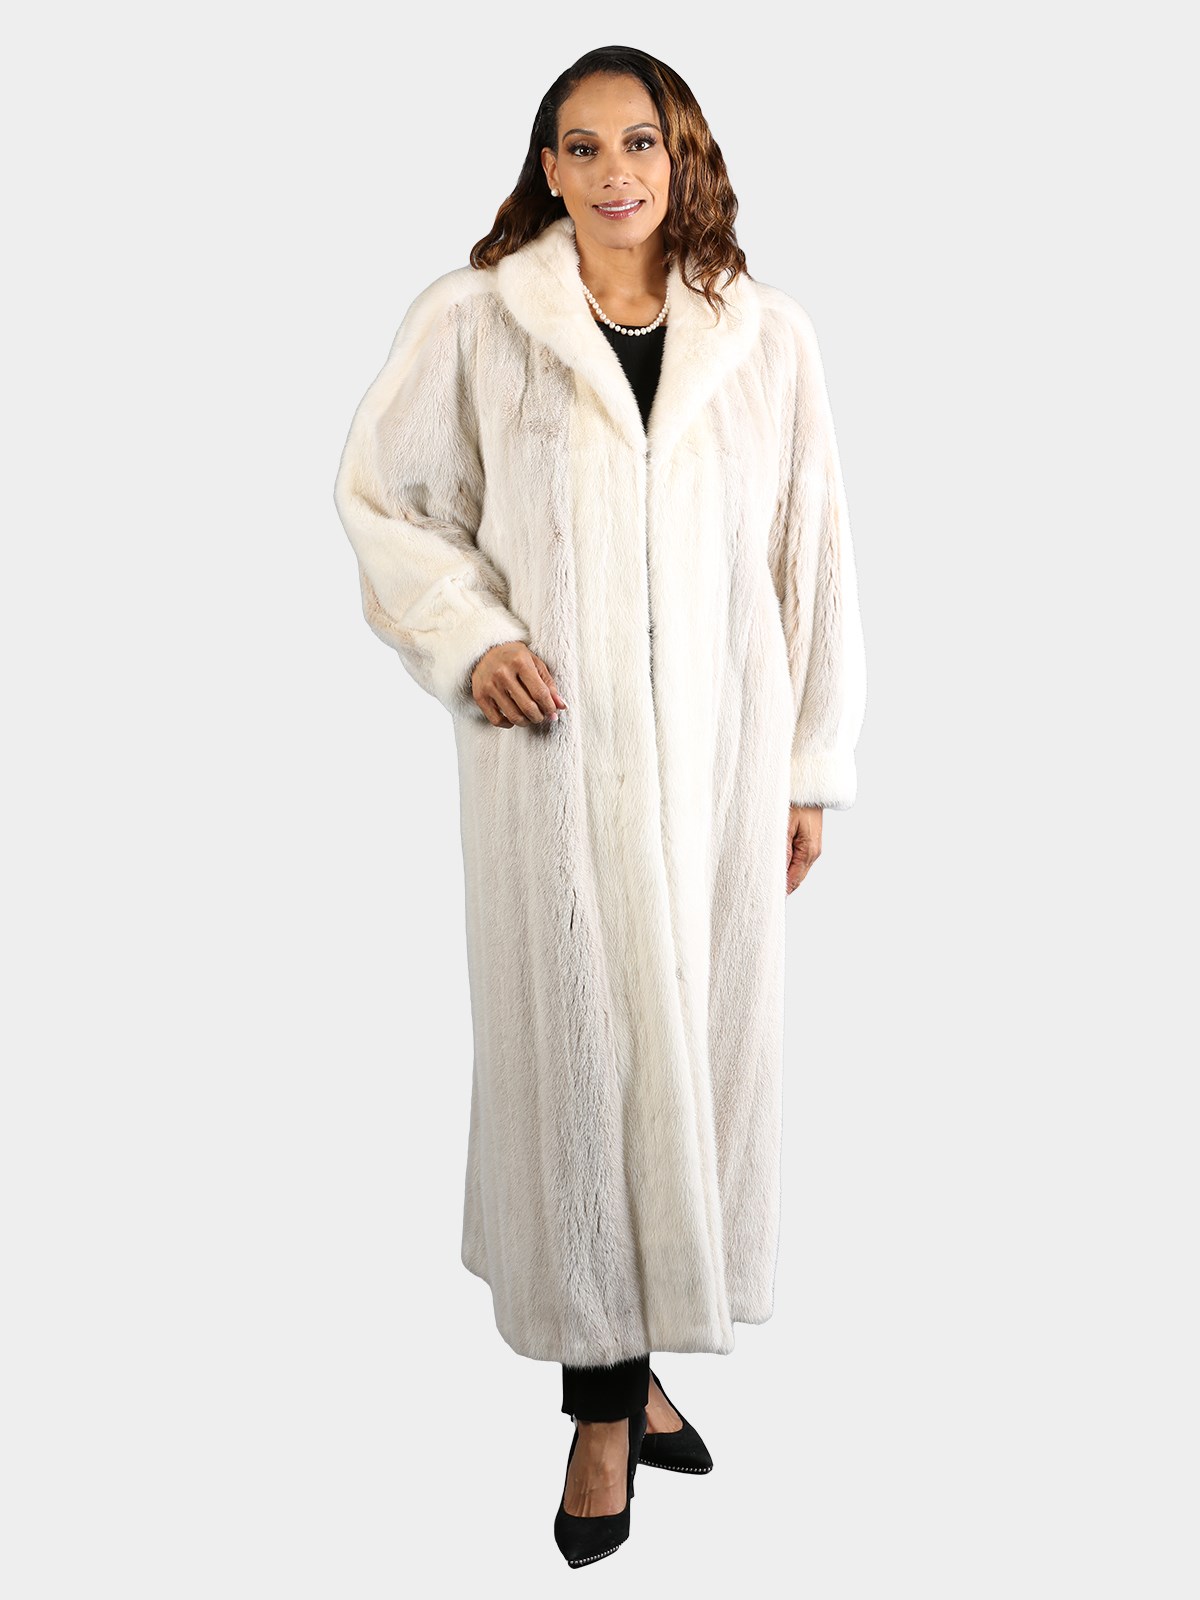 Woman's Blush Mink Fur Coat with Cream Lining